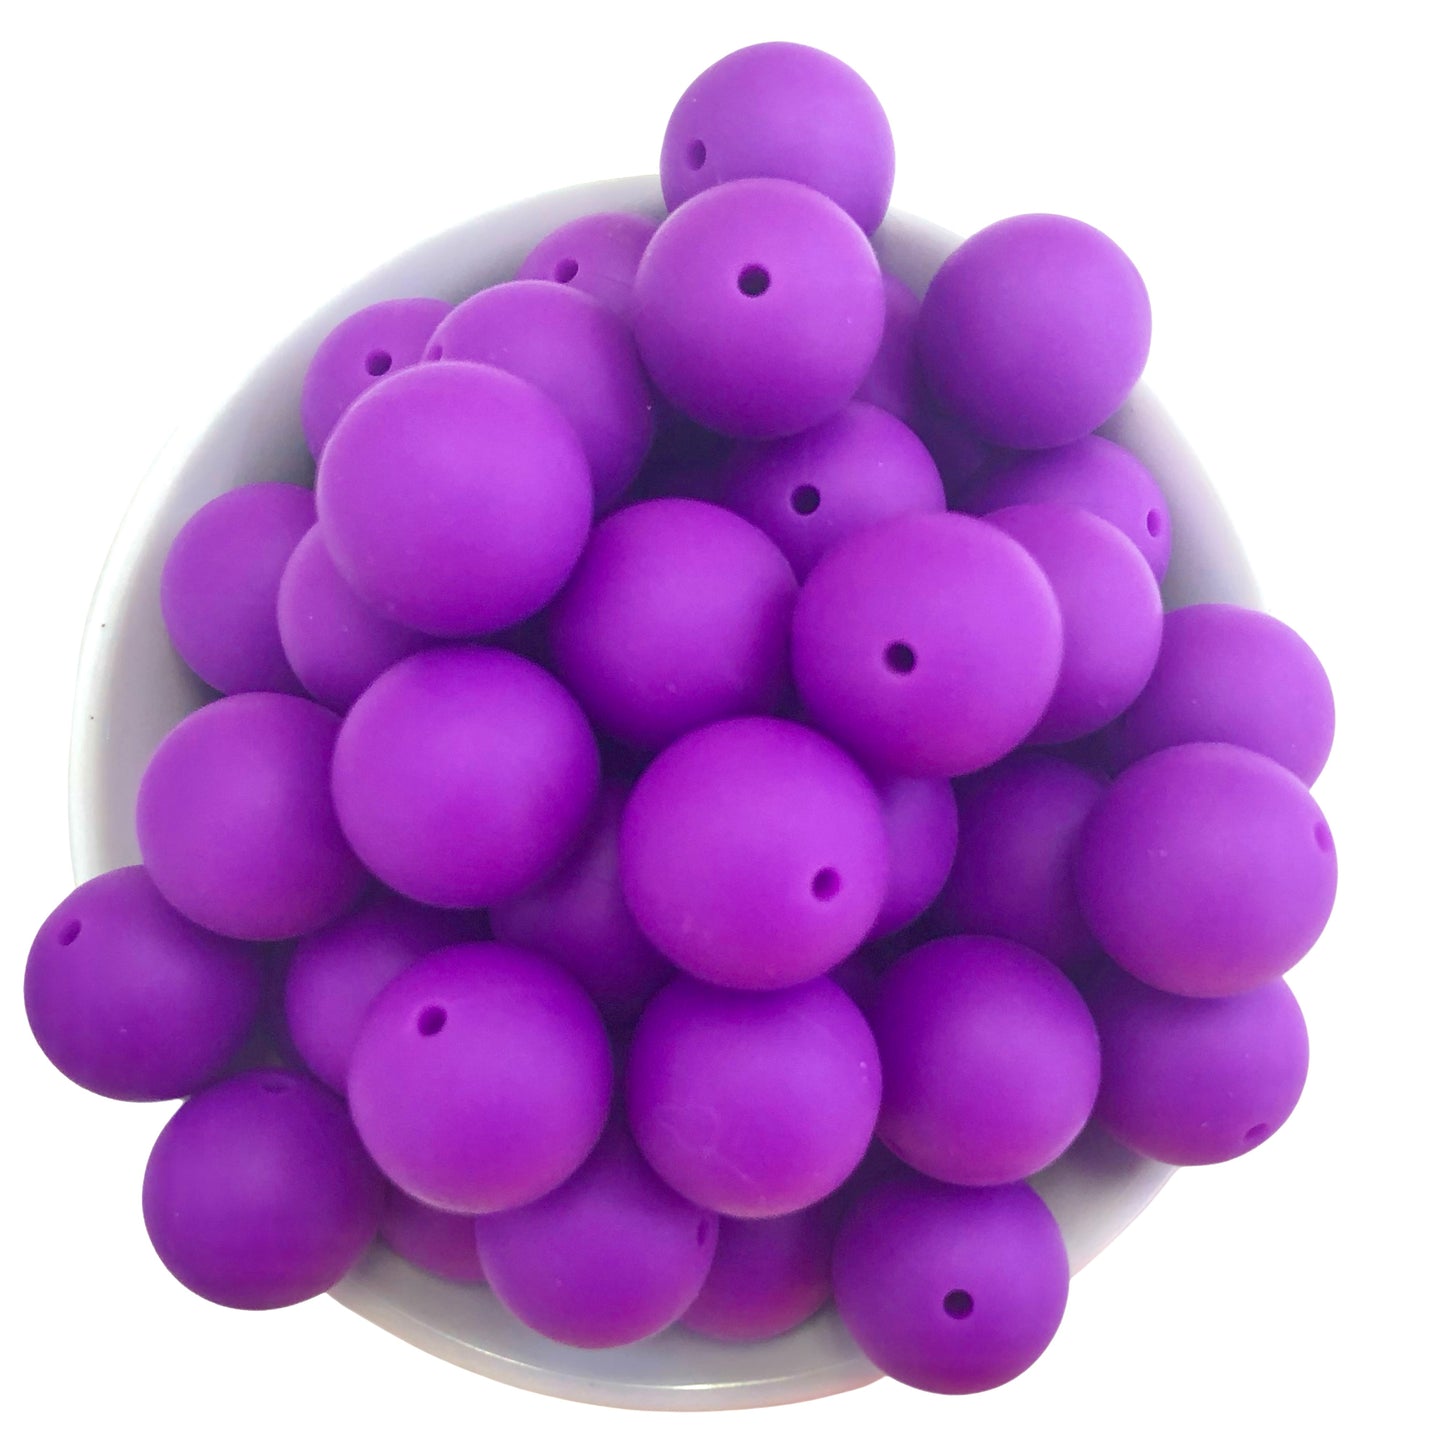 Purple Prince 15mm Silicone Beads - 10 pk.